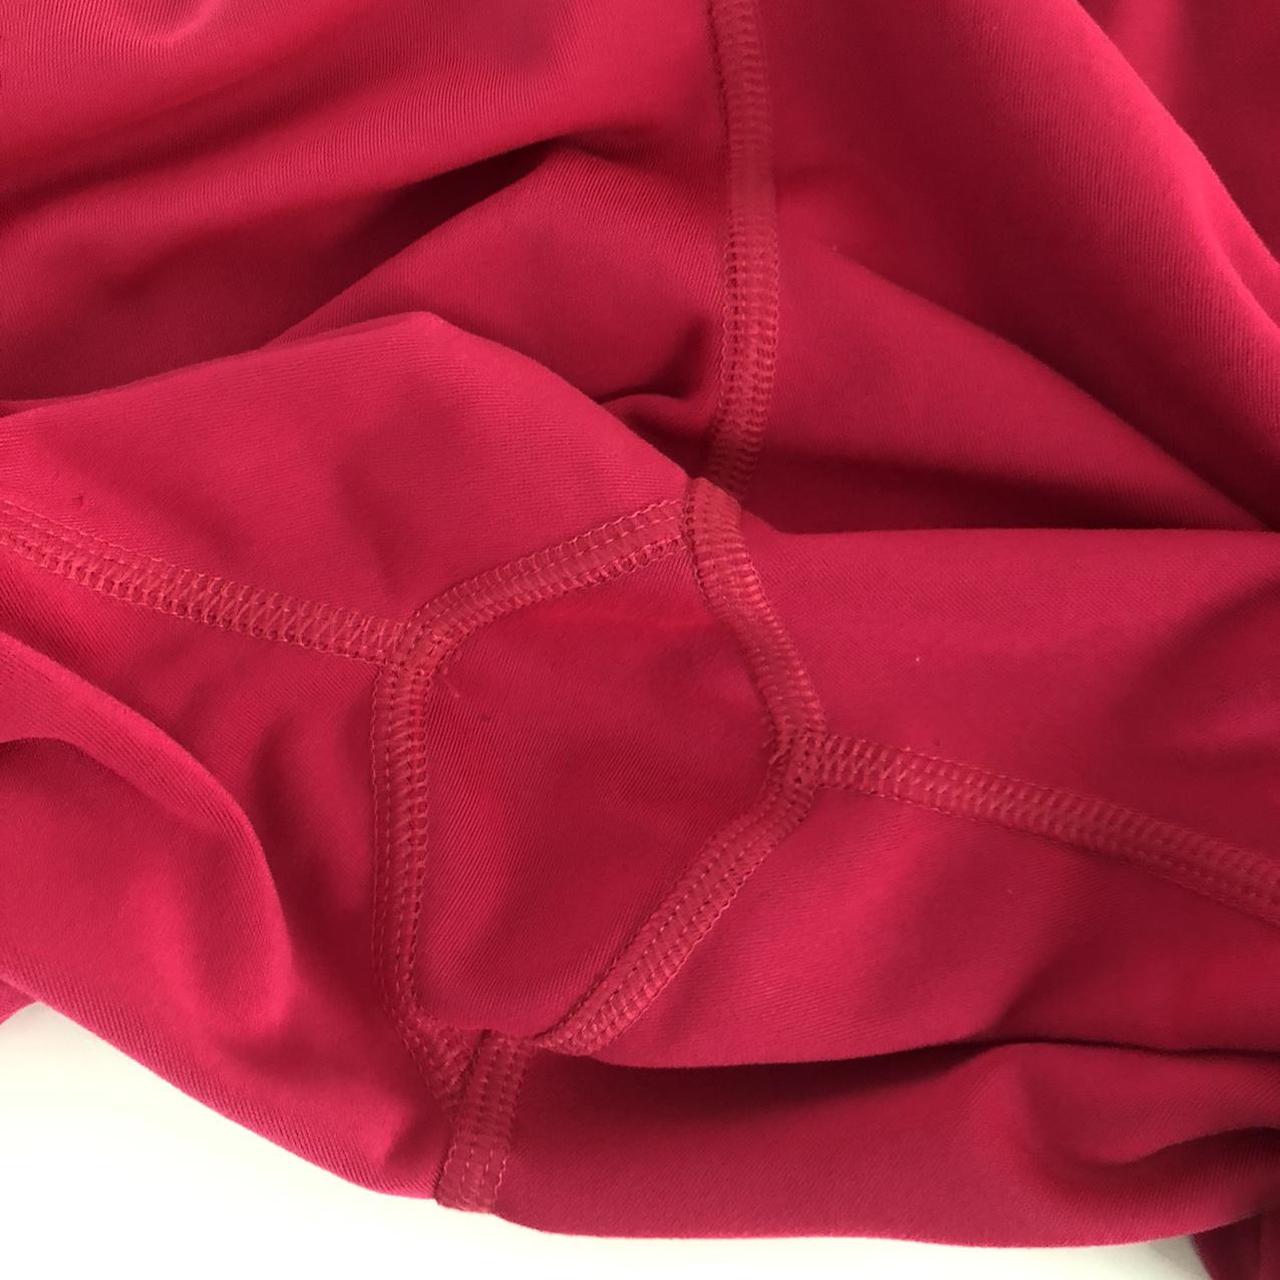 Product Image 4 - Adidas Climalite Hot Pink Workout